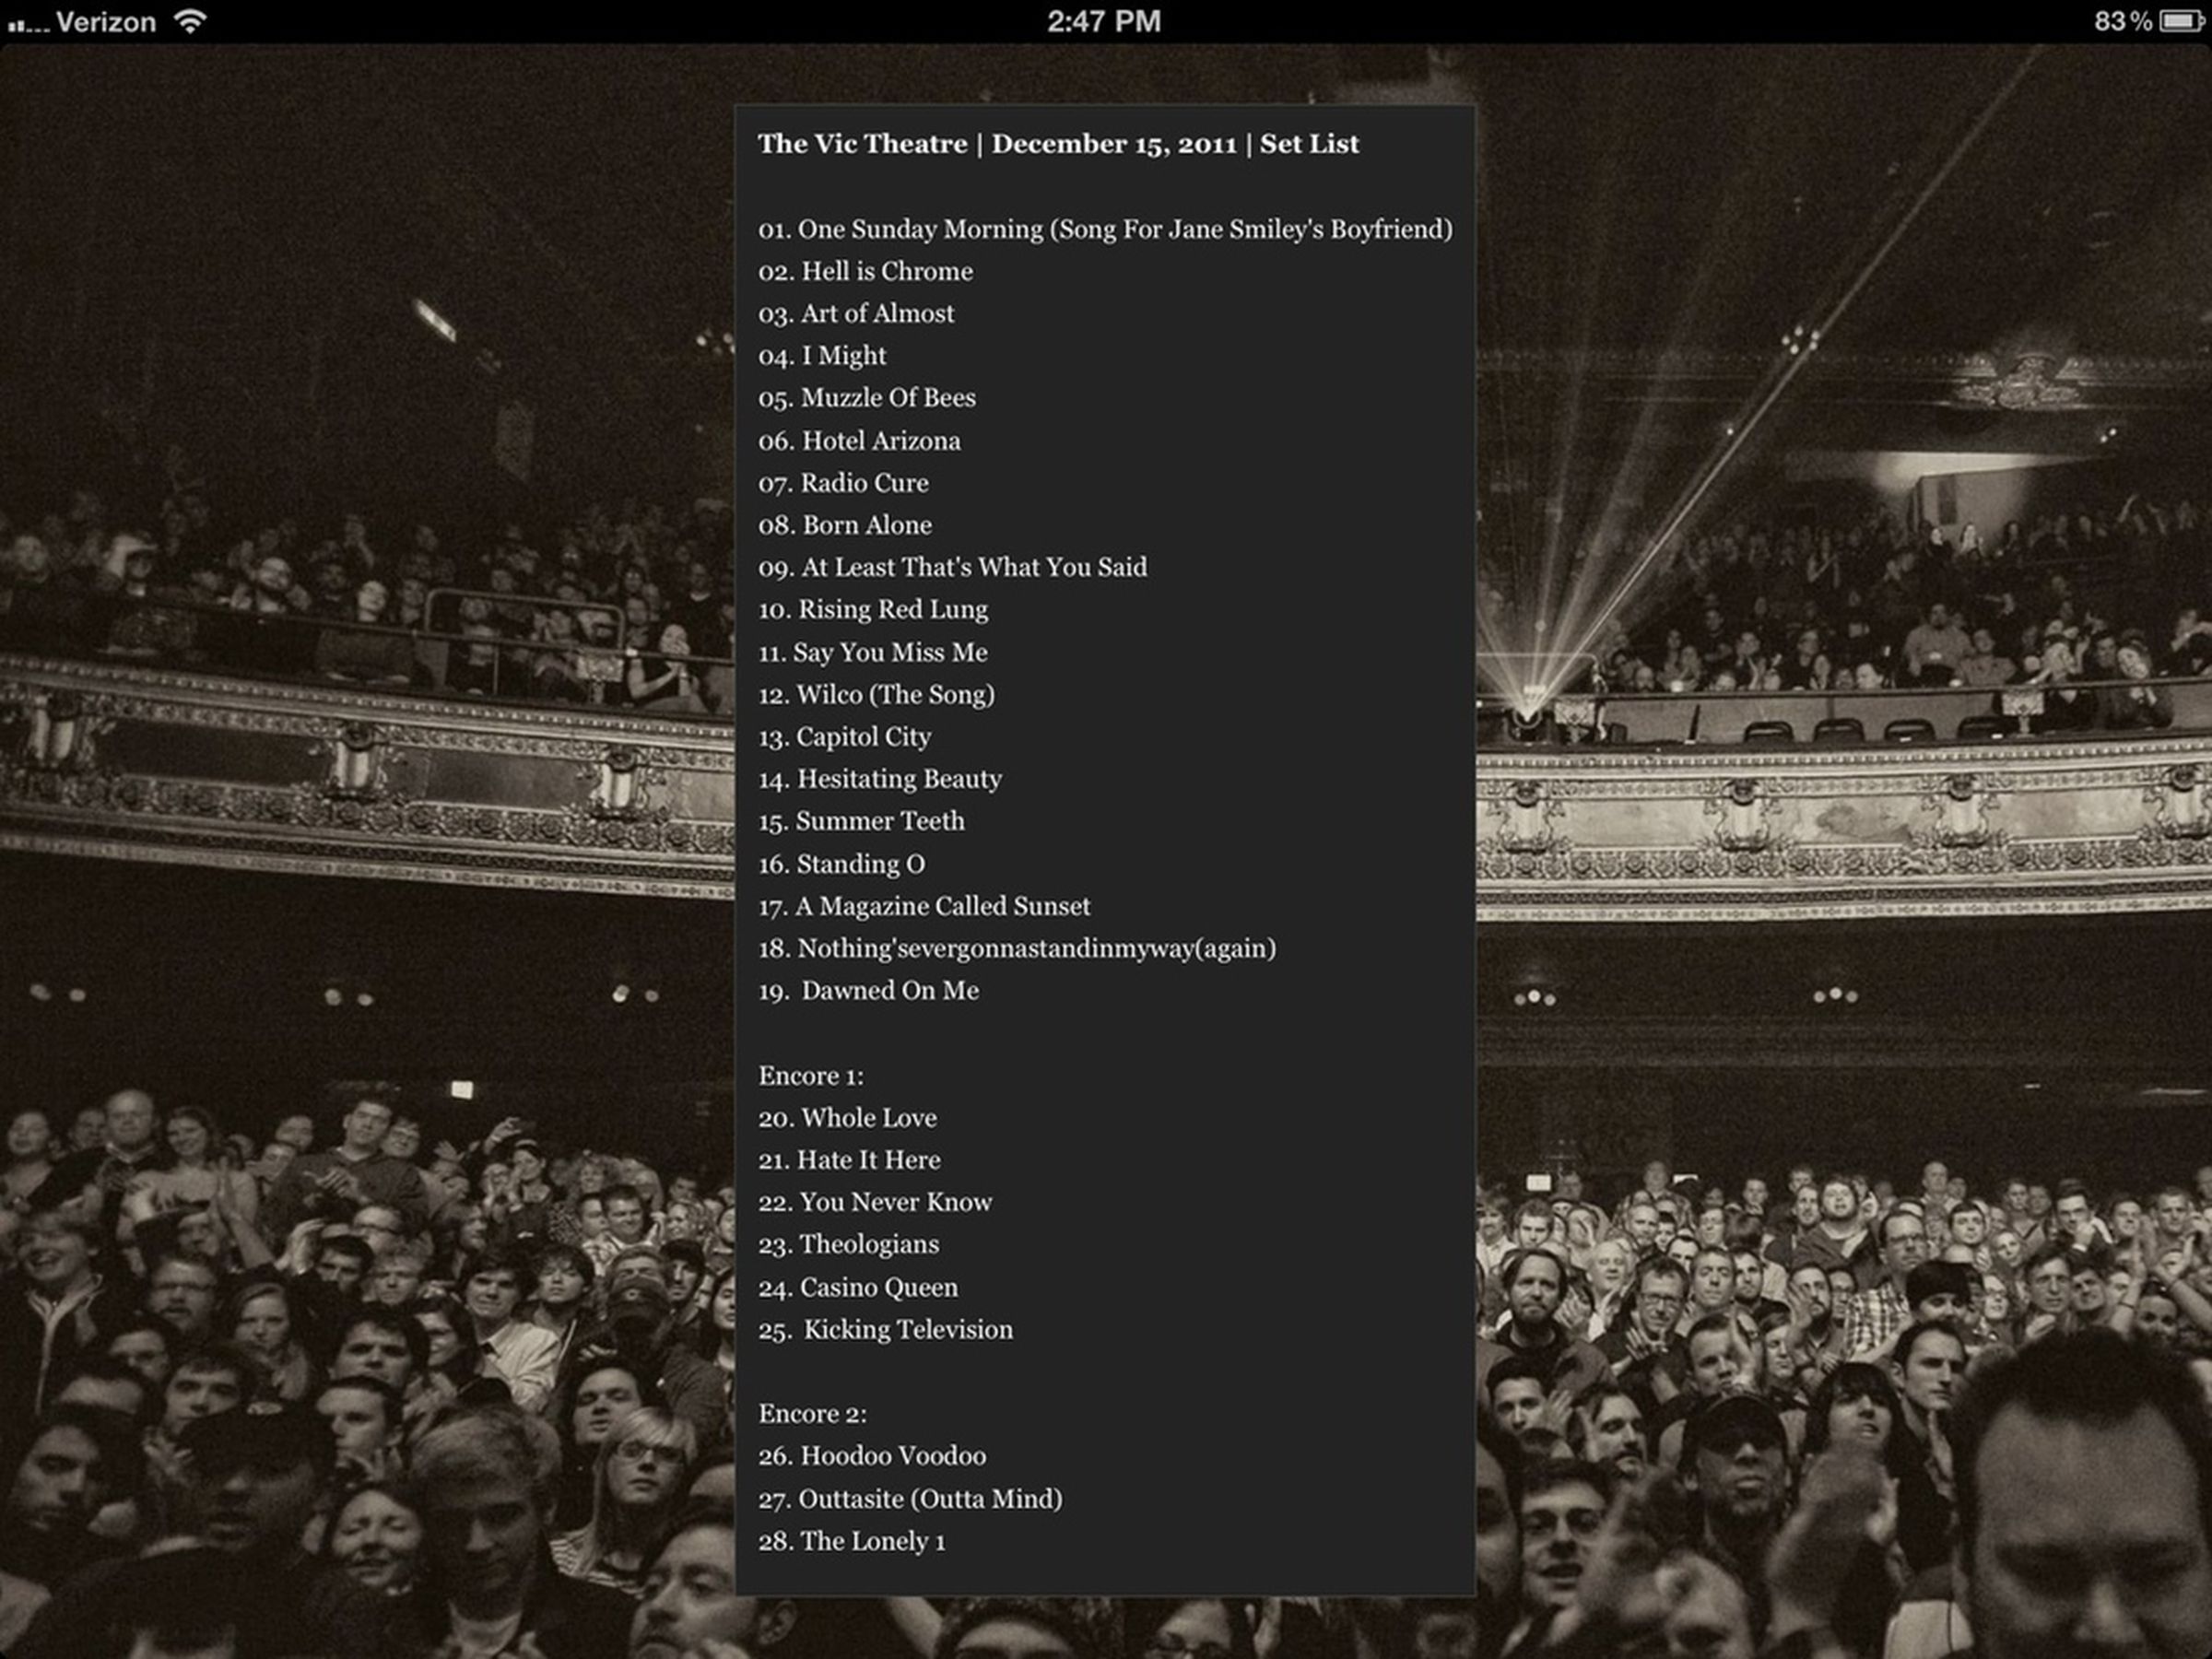 Wilco iBooks interactive tour documentary